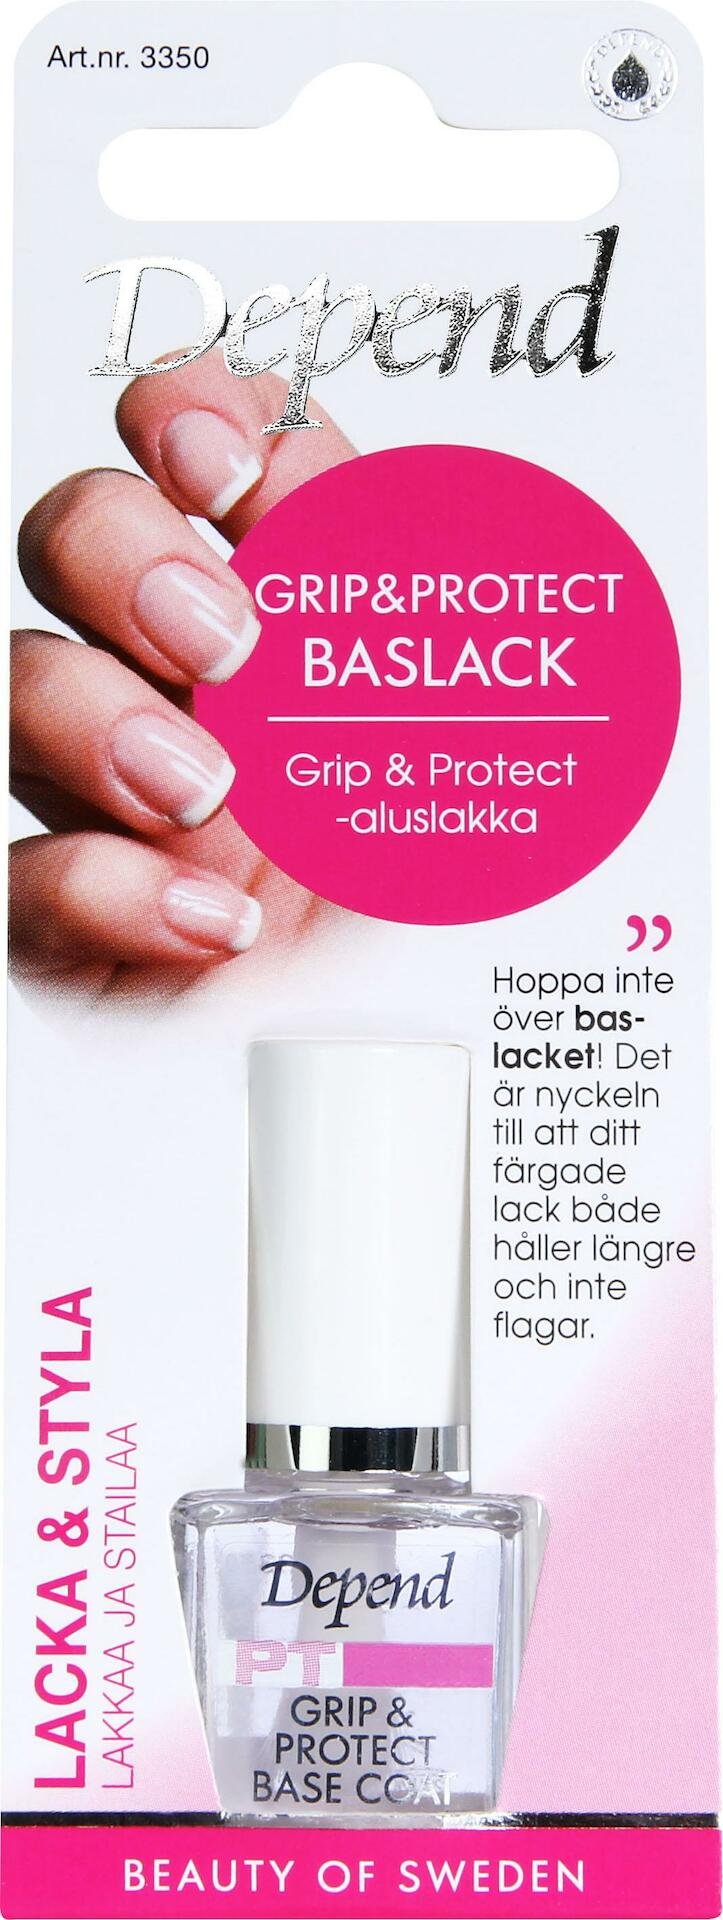 Depend Grip & Protect Baslack